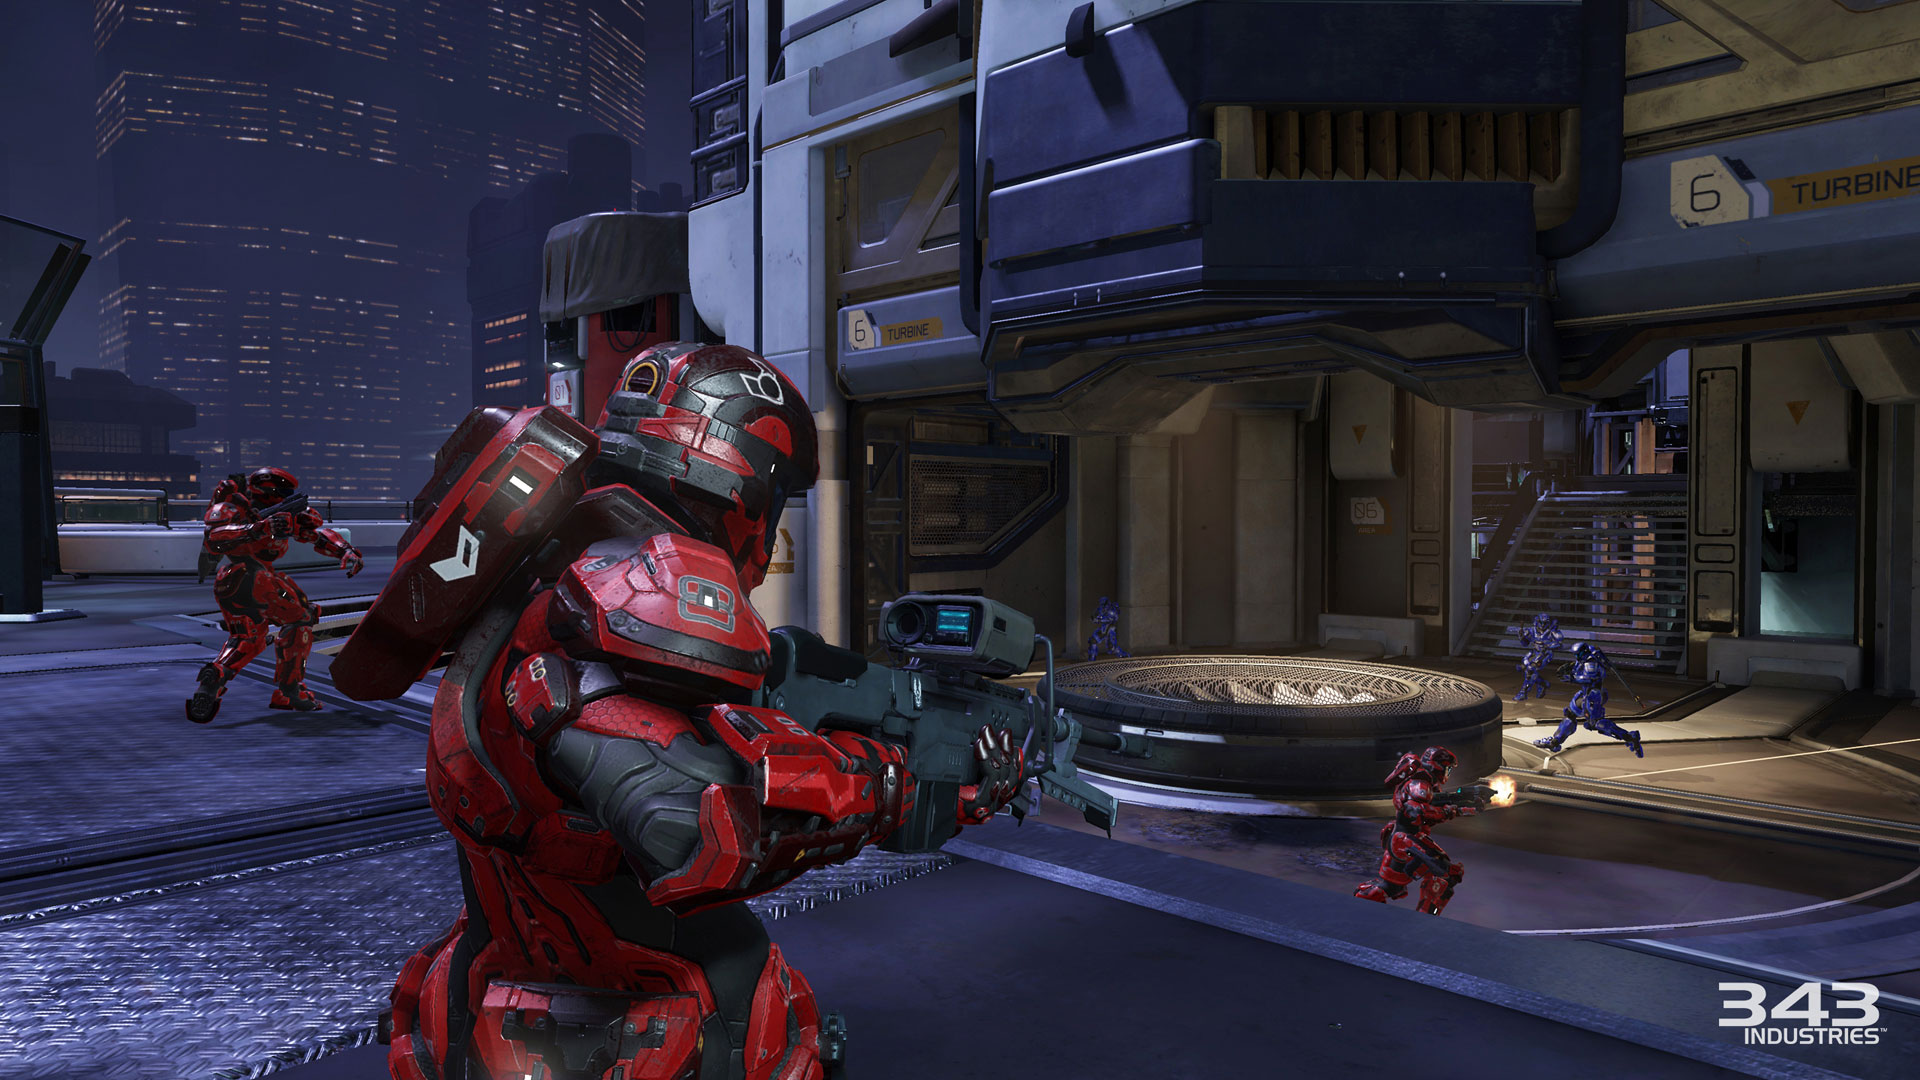 Halo 5: Guardians screenshot 4256